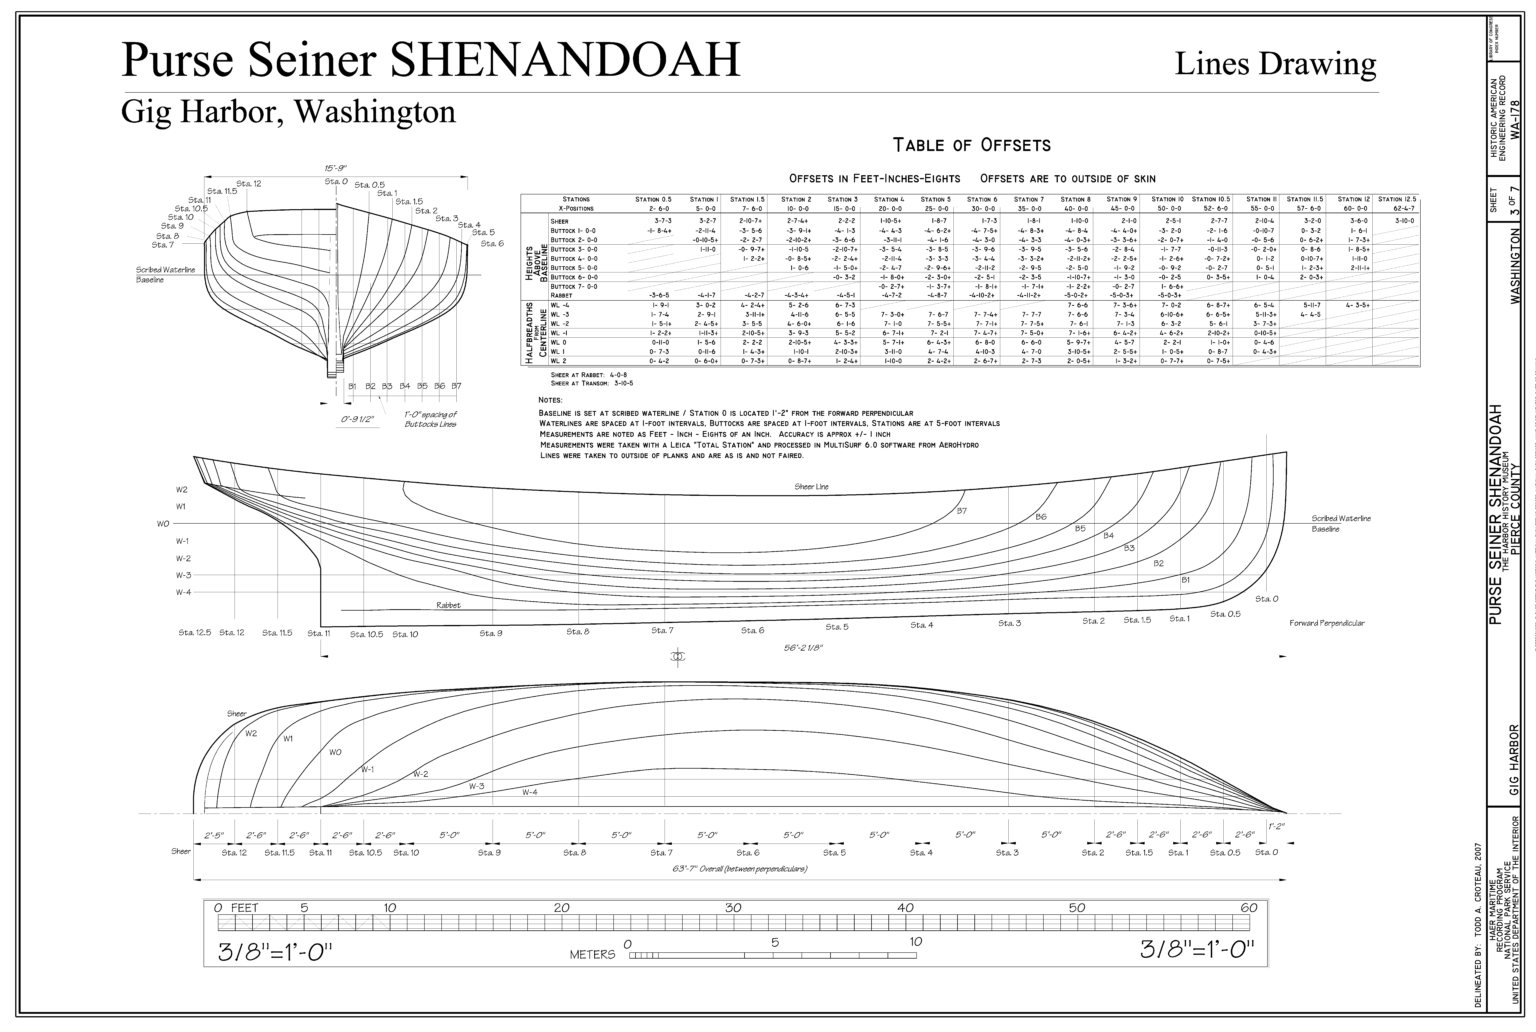 Launch plans. Table of Offsets корпуса судна. Паровой катер Fantail. Сейнер Графика. Model Purse seiner Tuna Boat.